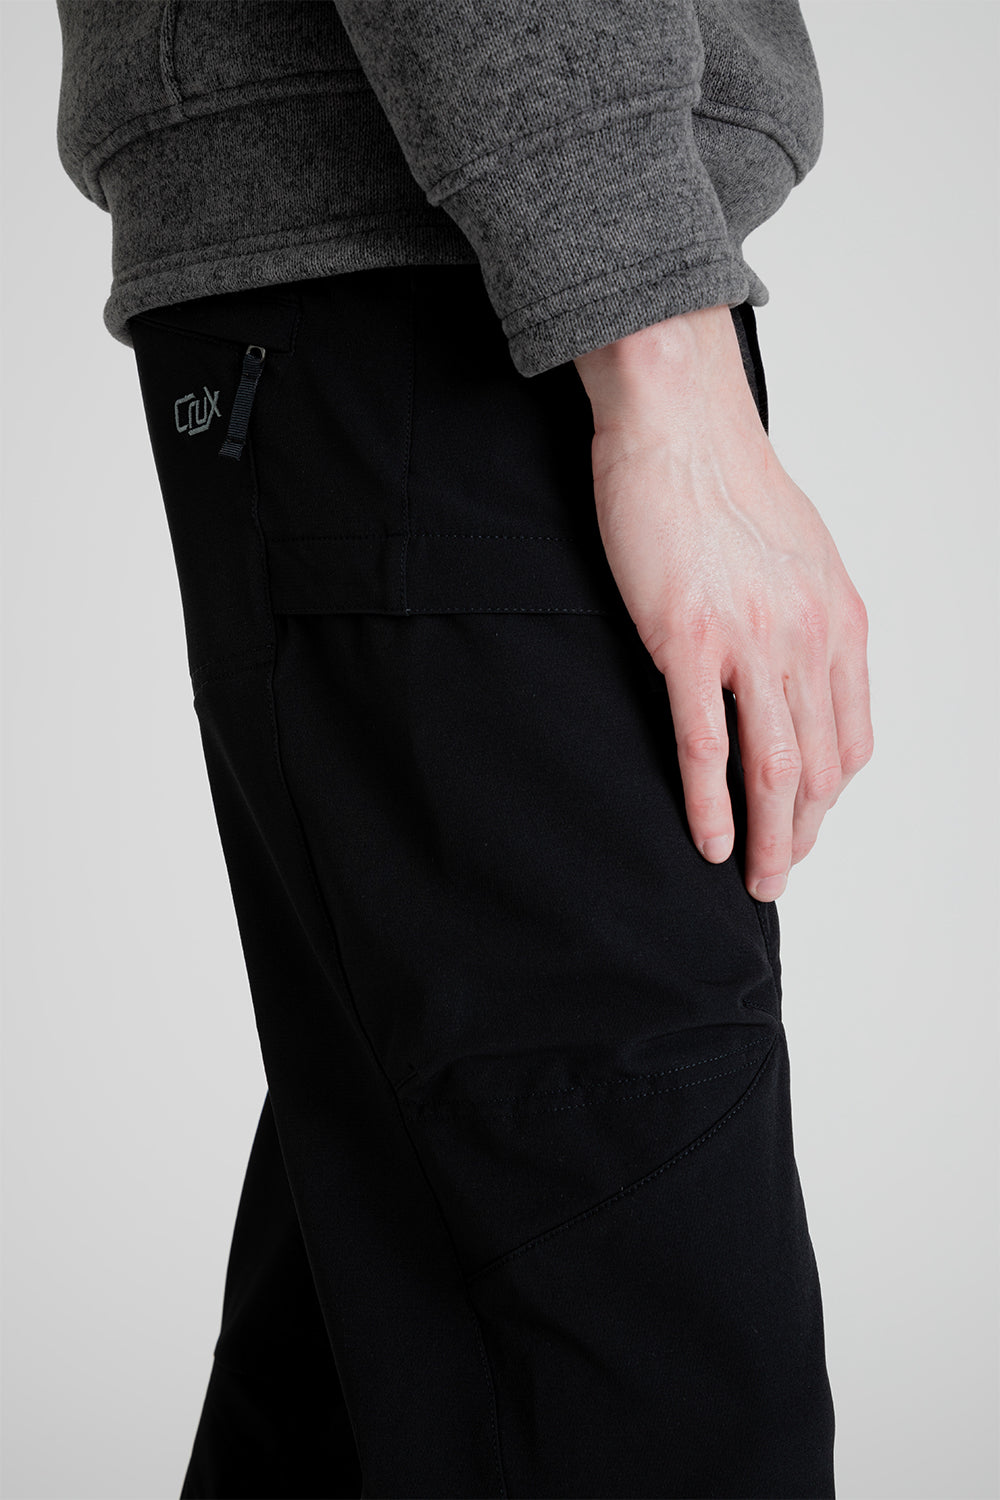 Tilak Crux Pants in Black